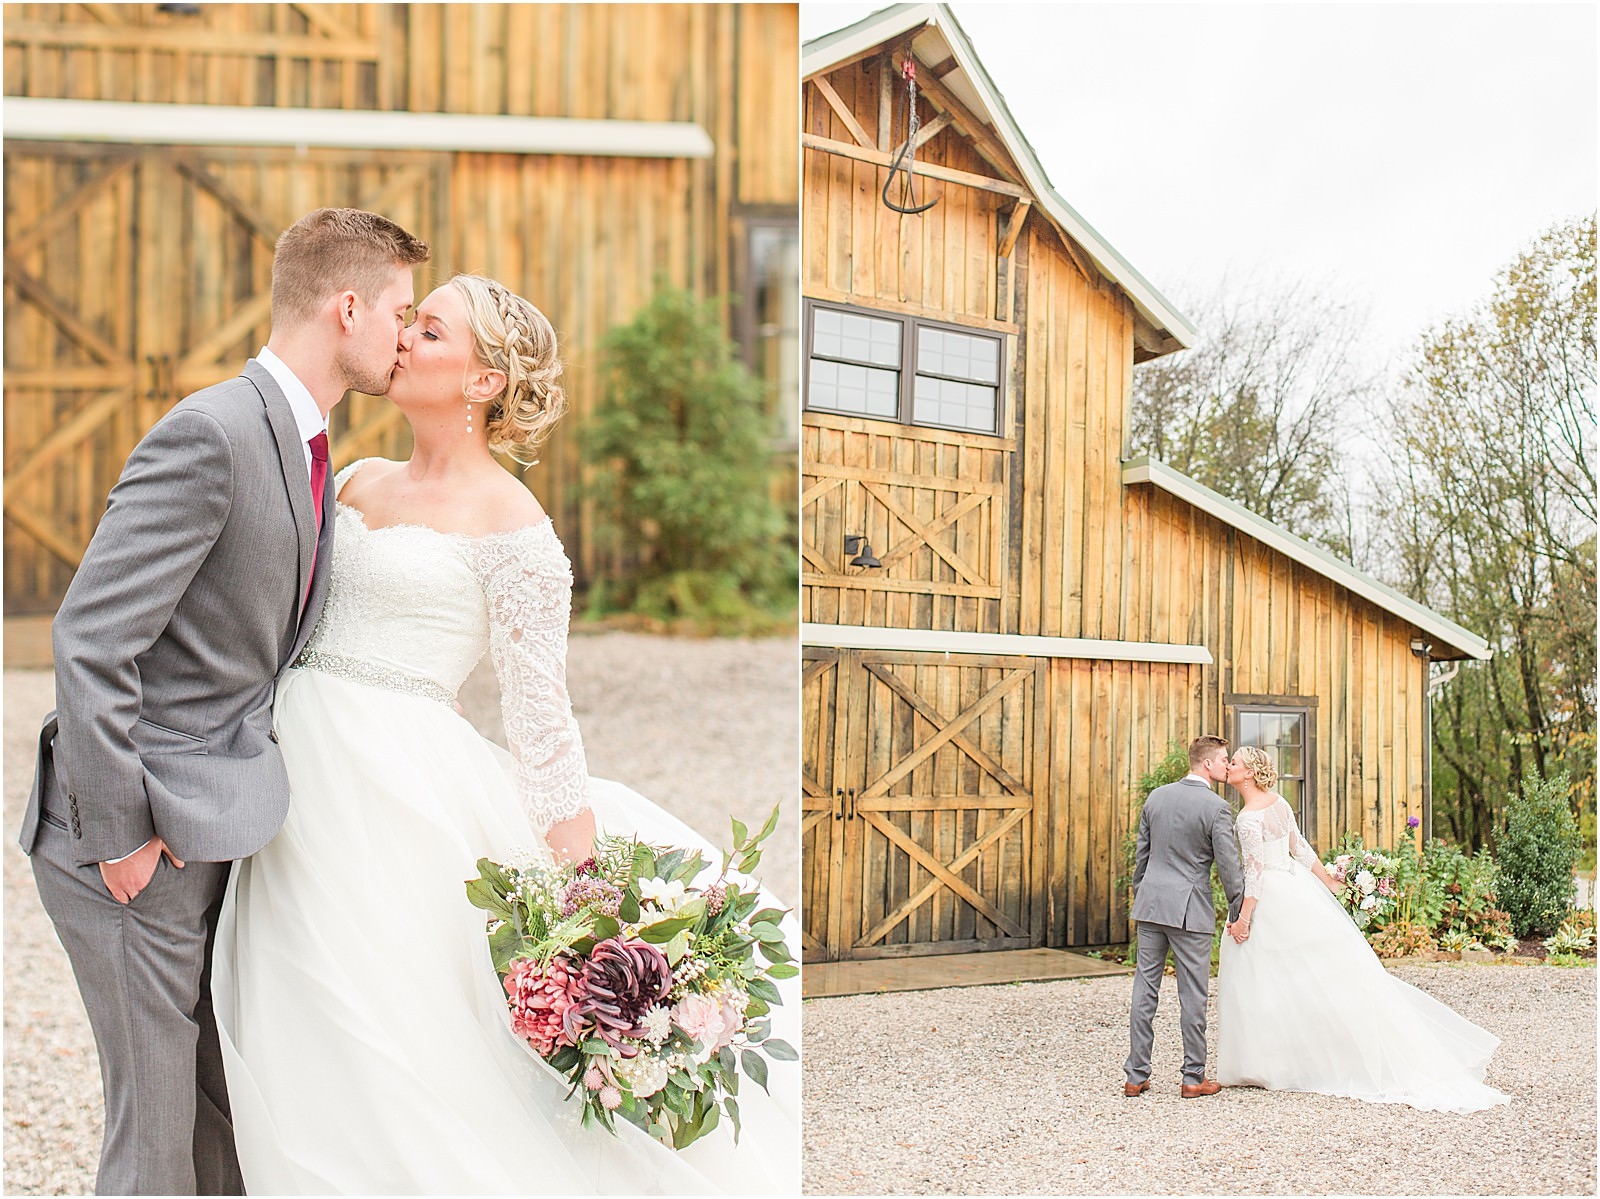 A Rainy Corner House Wedding | Rachel and Nick | Bret and Brandie Photography 0052.jpg